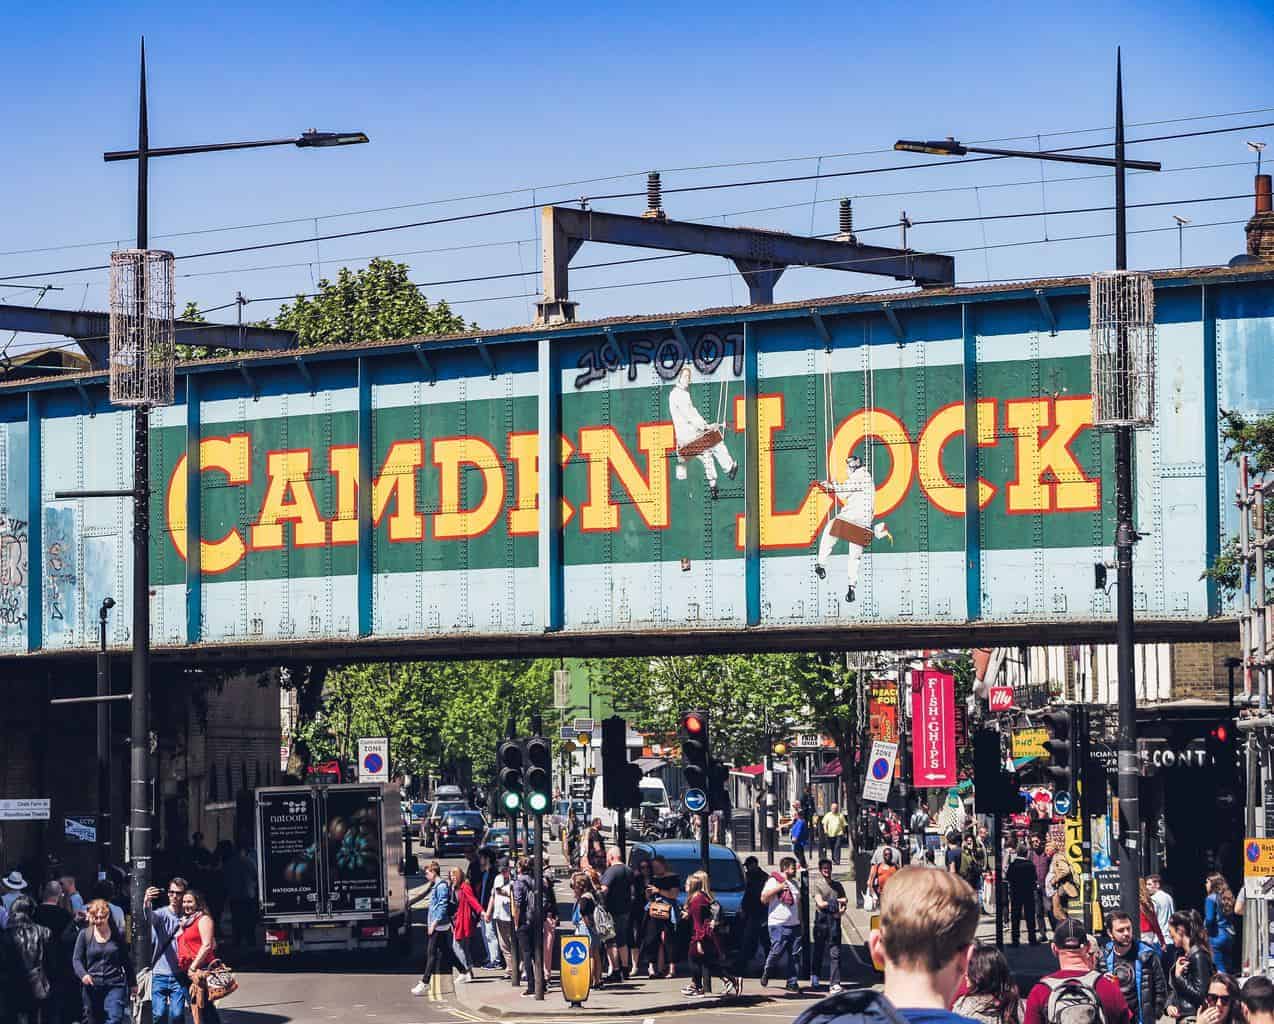 Brick Lane vs. Camden Market: Which Should I Visit?